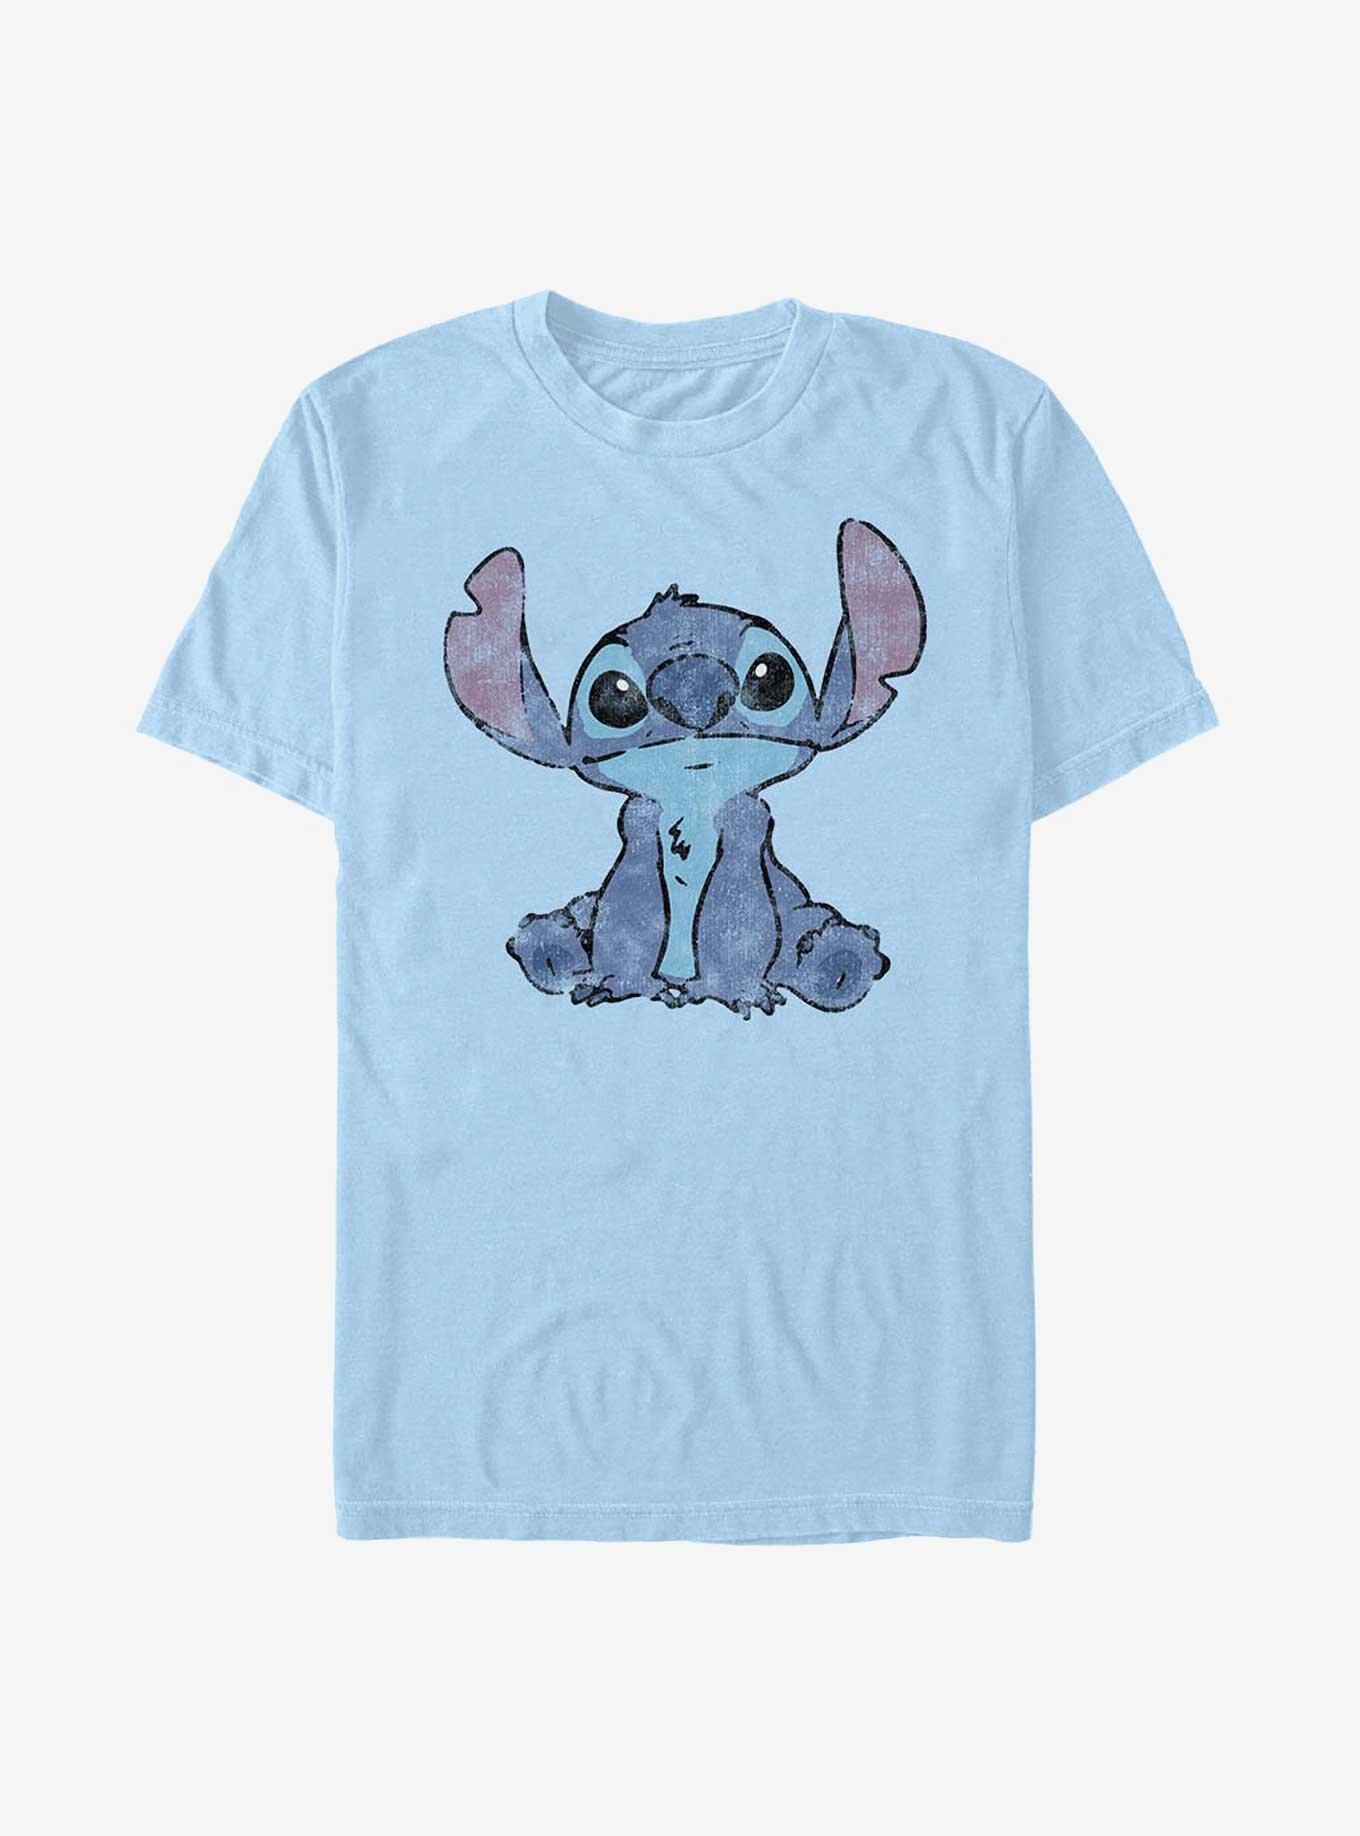 Disney Lilo & Stitch Simply T-Shirt